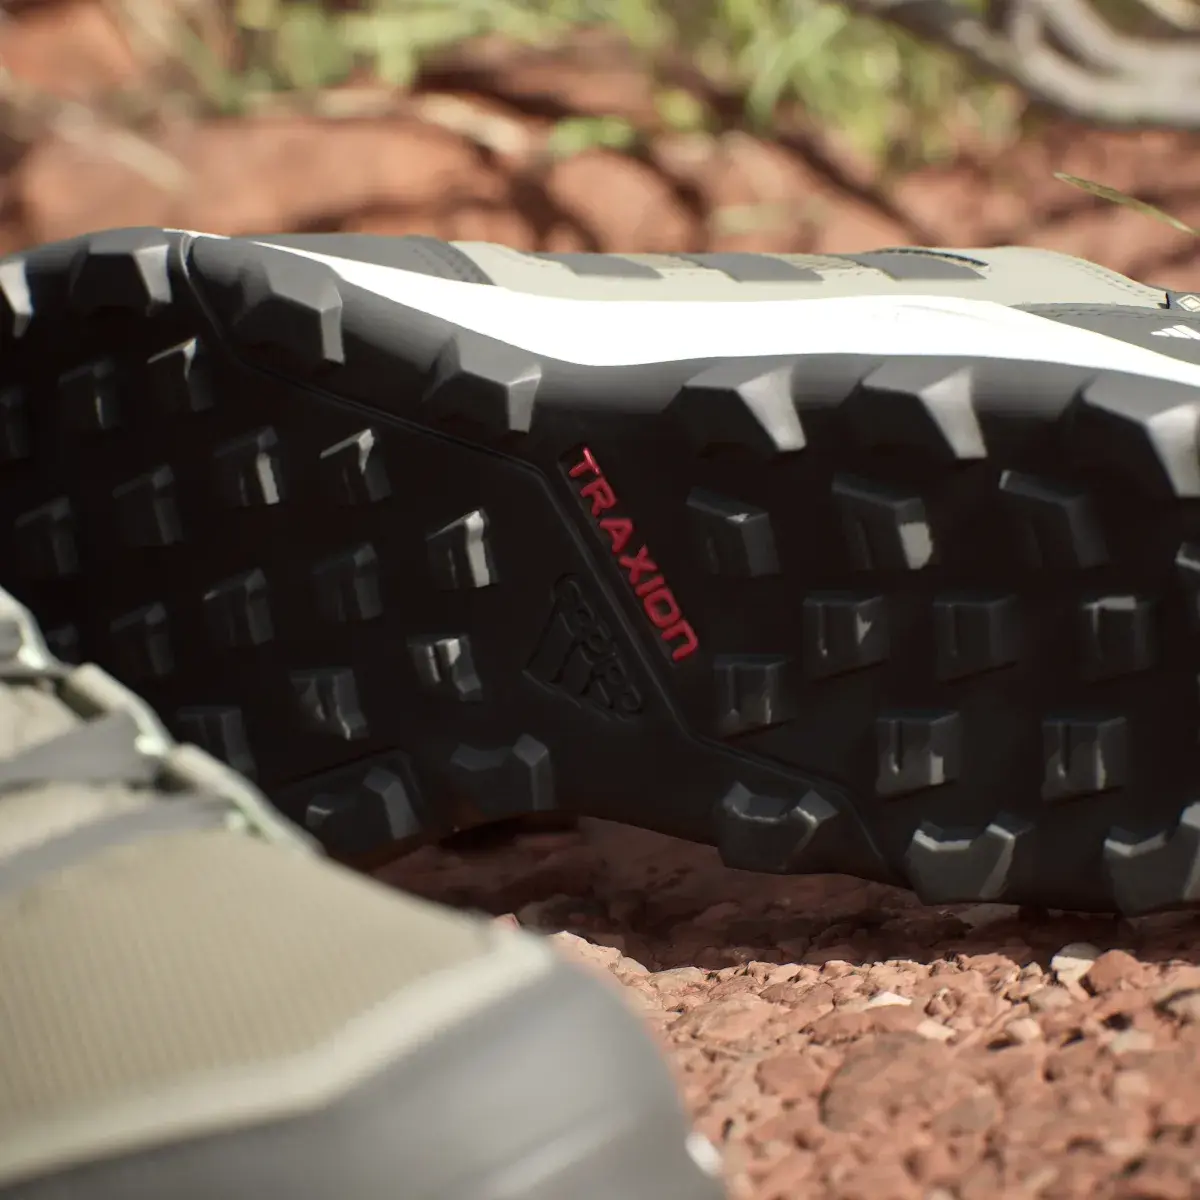 Adidas Chaussure de trail running Tracerocker 2.0 GORE-TEX. 2